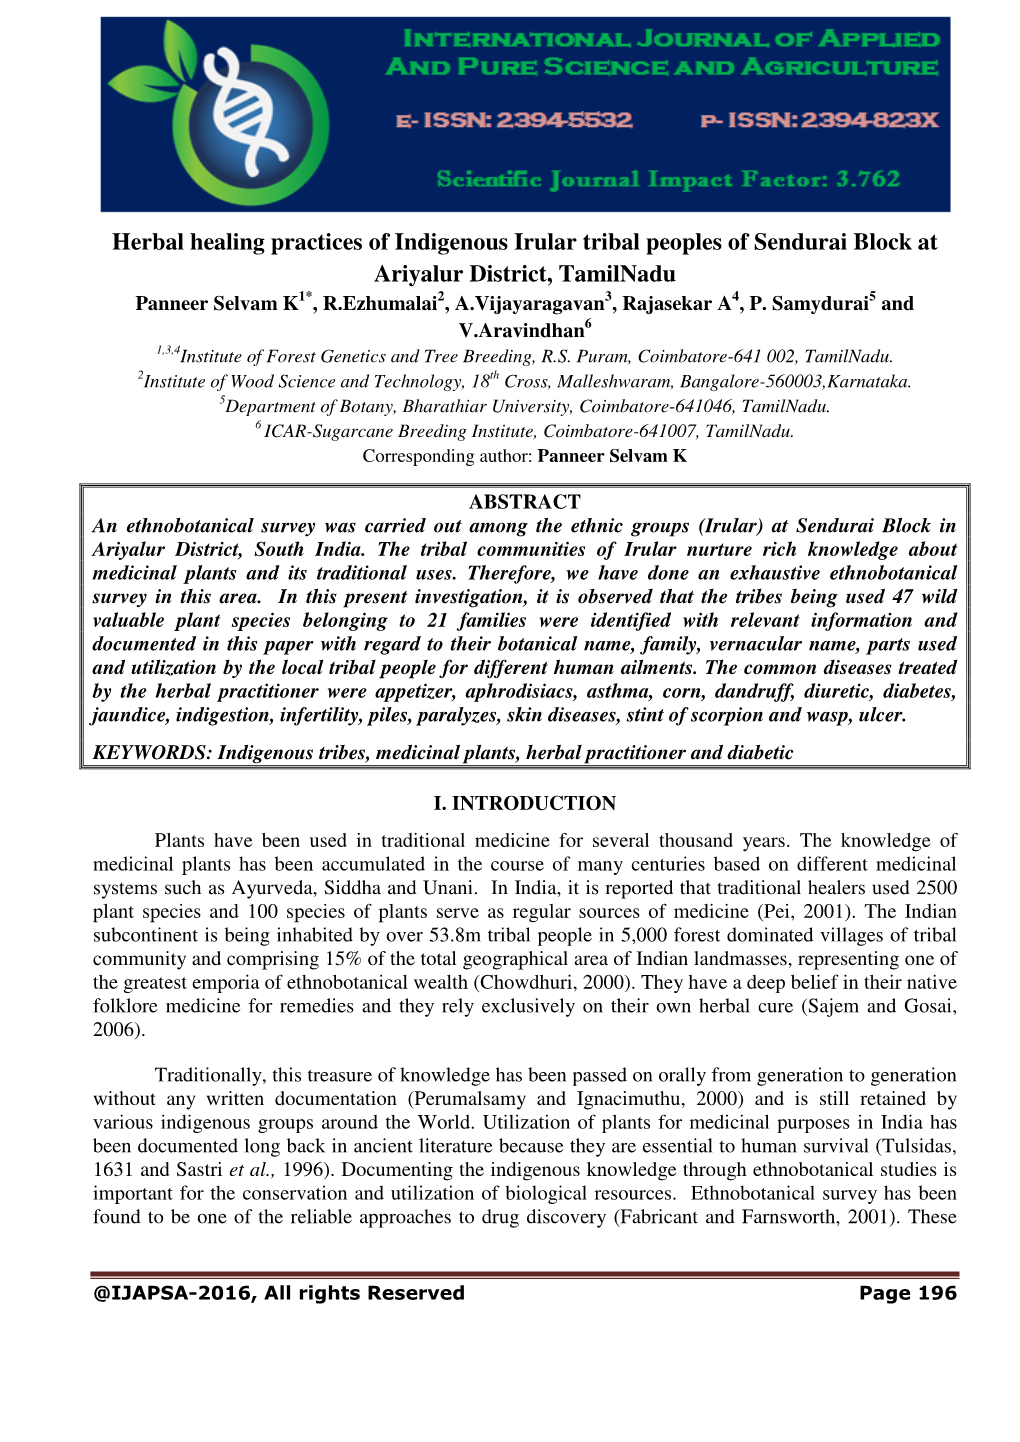 Herbal Healing Practices of Indigenous Irular Tribal Peoples Of